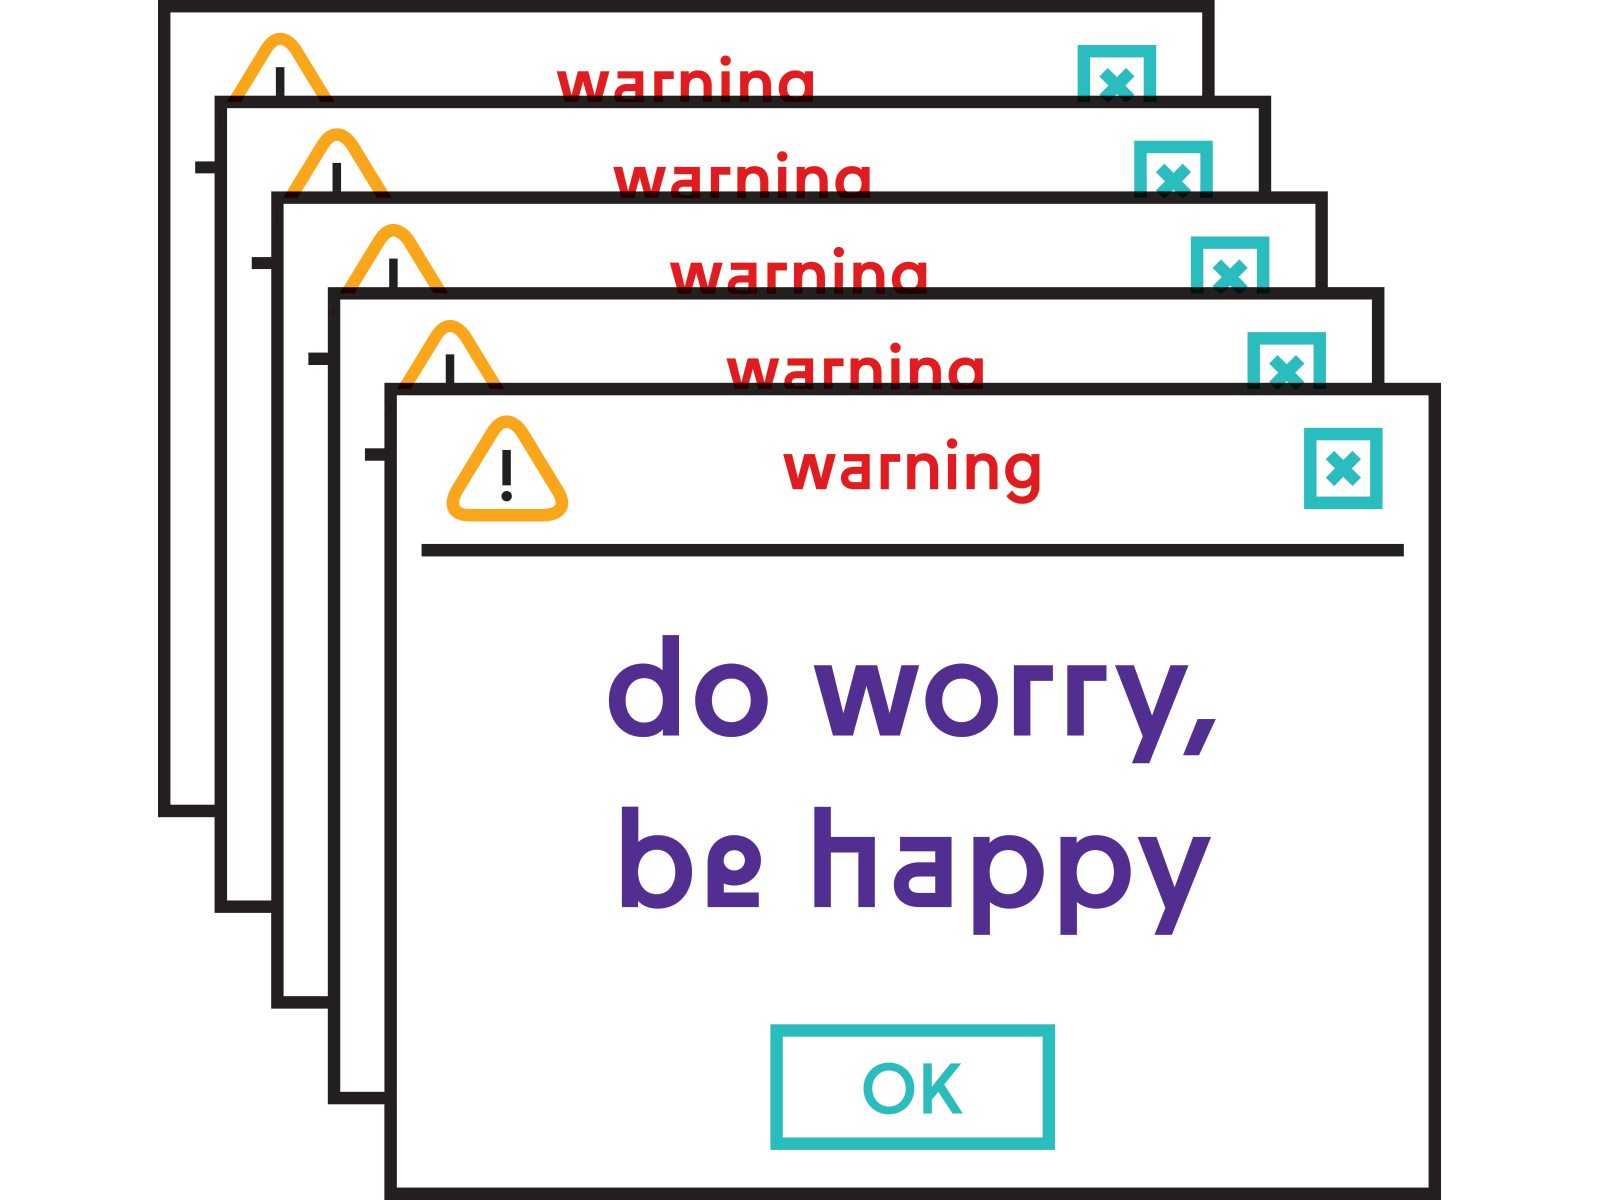 Do Worry be happy visual